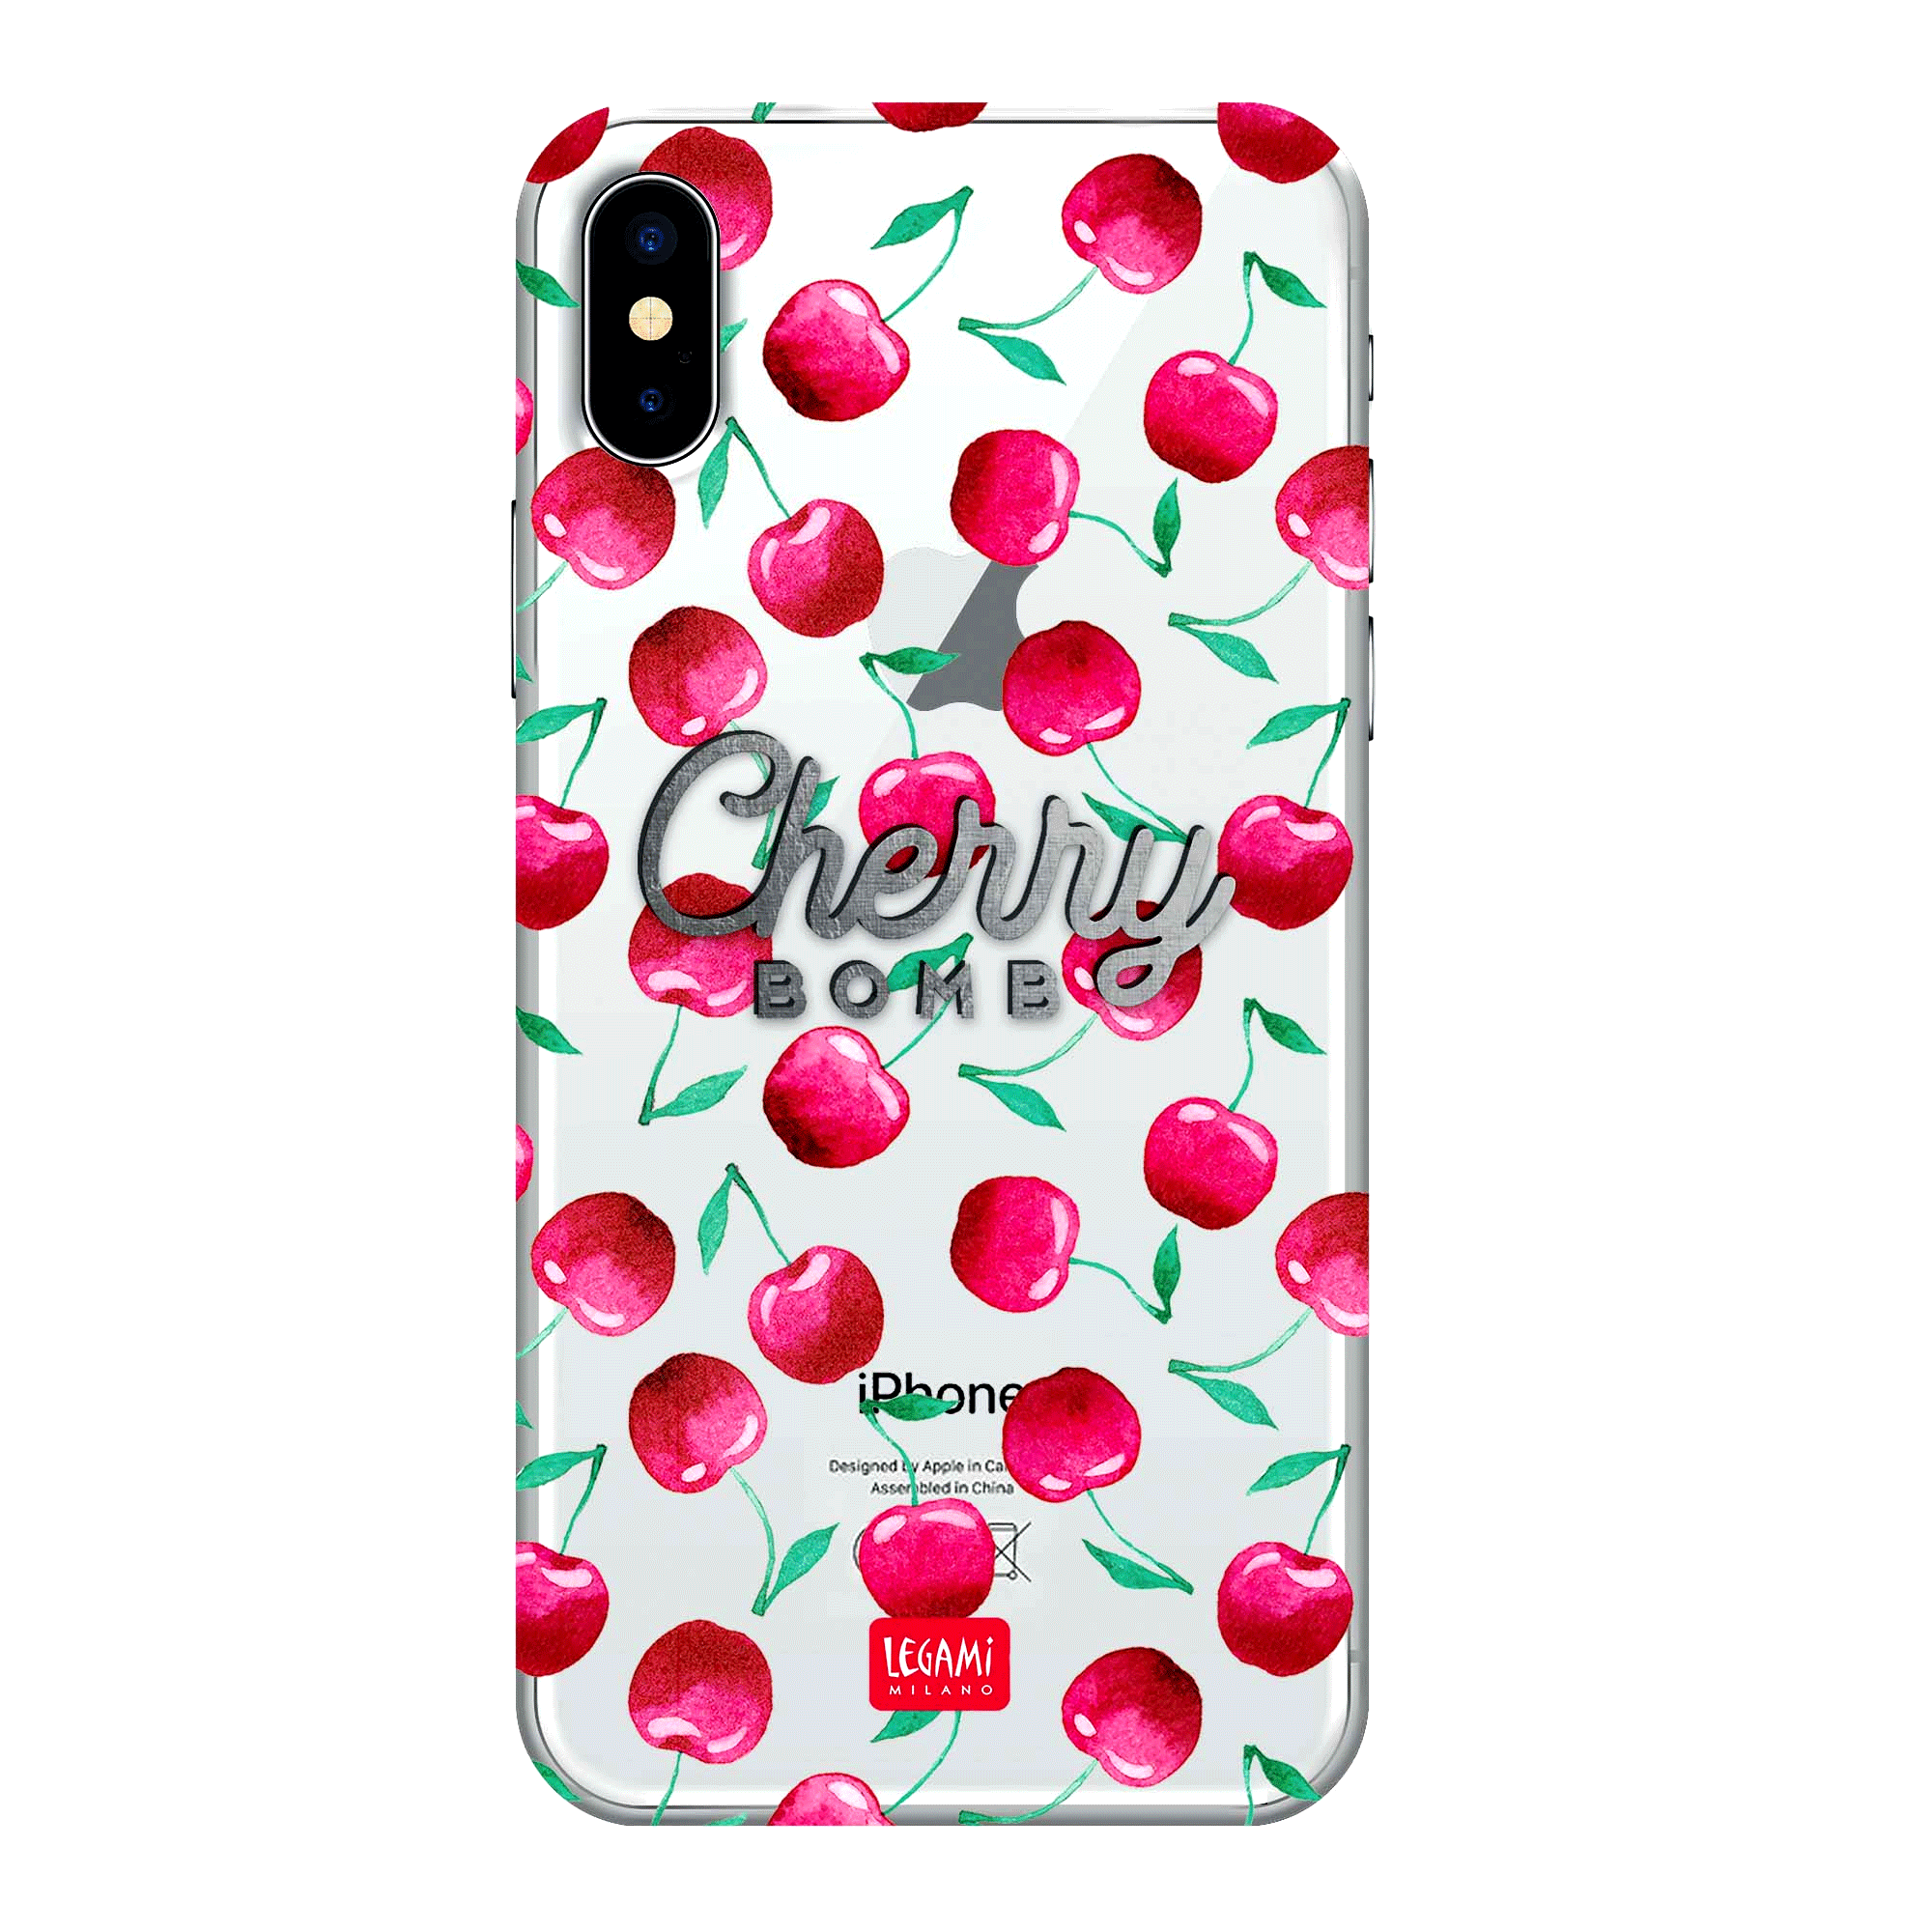  Carcasa de Iphone XS Max - Cherry | Legami 